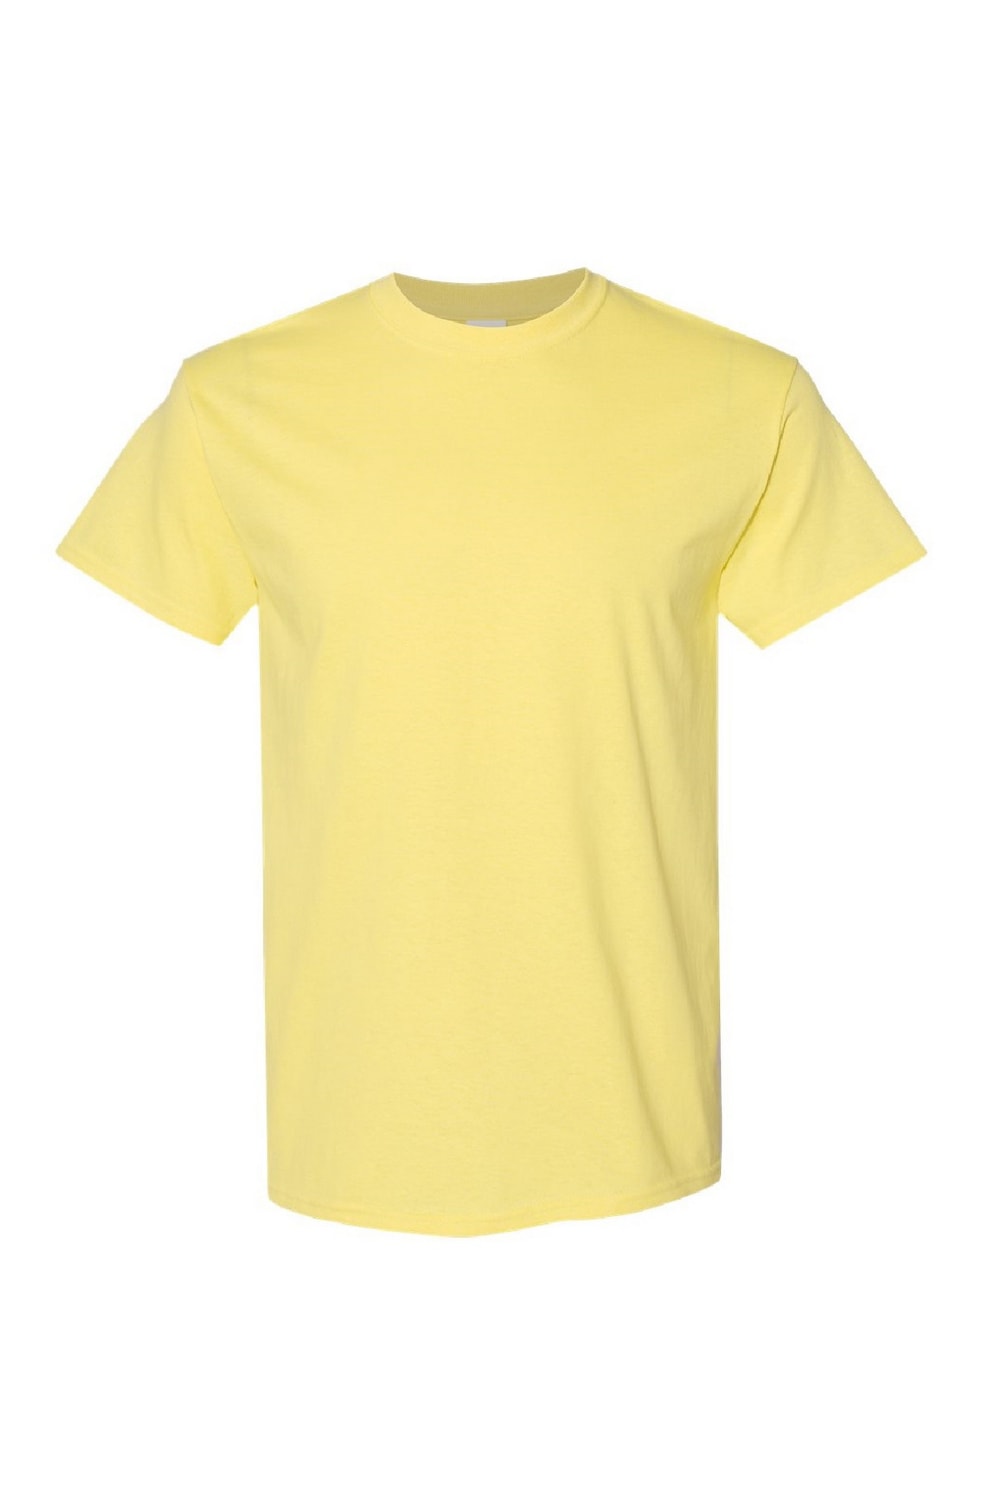 Gildan Mens Heavy Cotton Short Sleeve T-Shirt (Cornsilk)